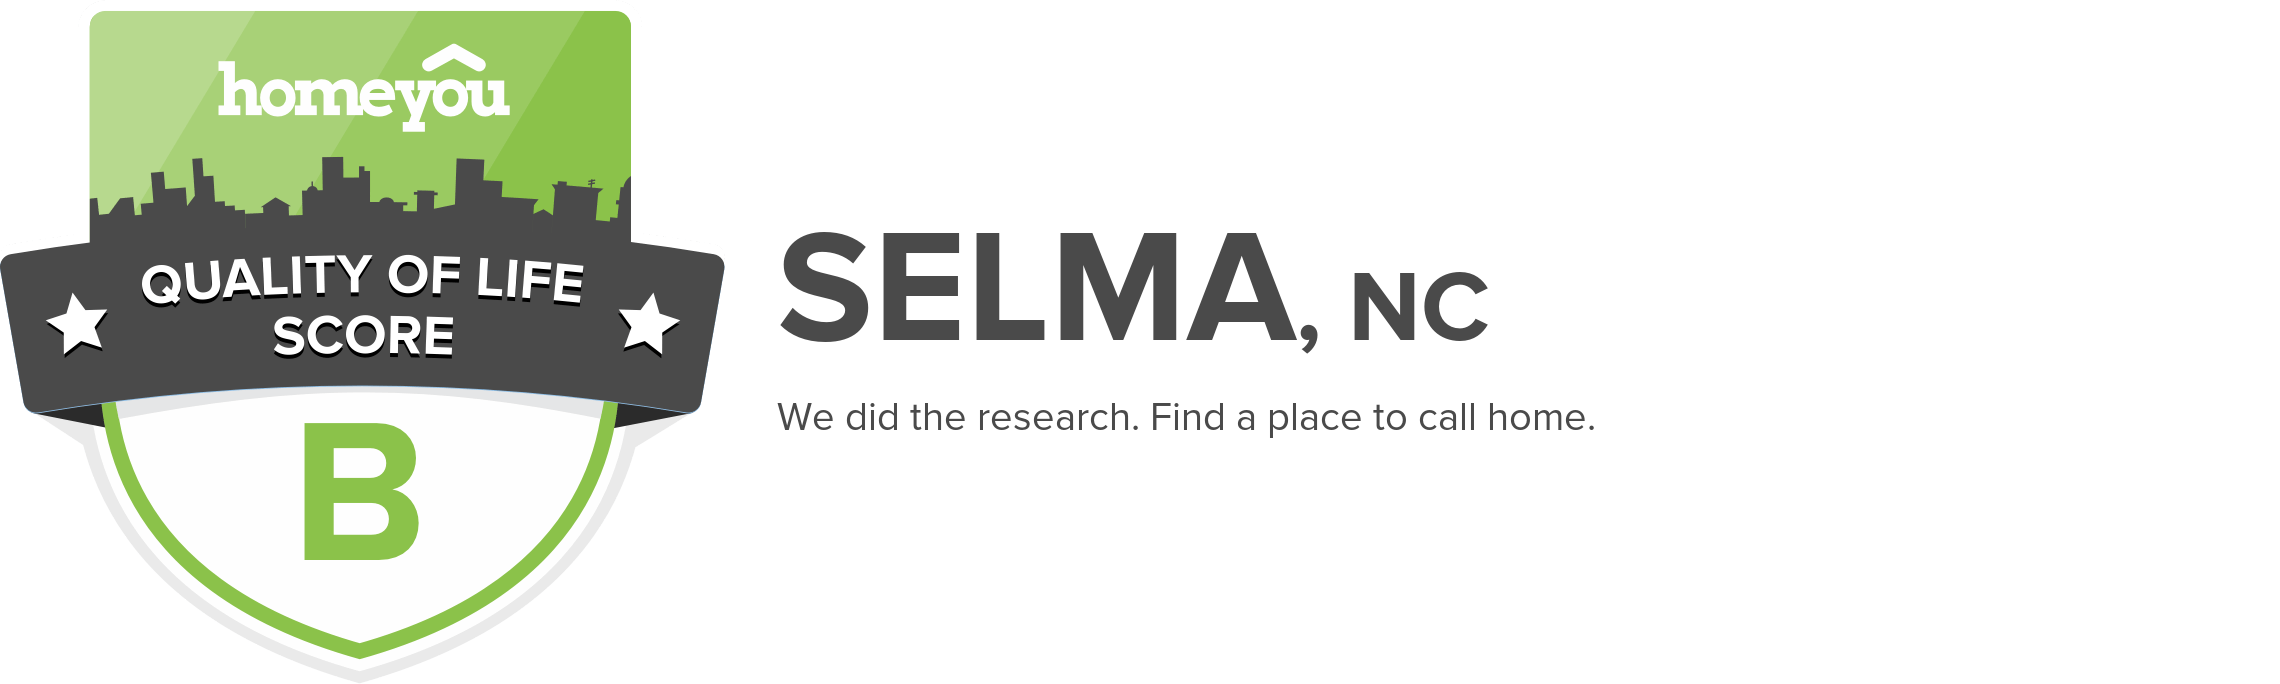 Selma, NC